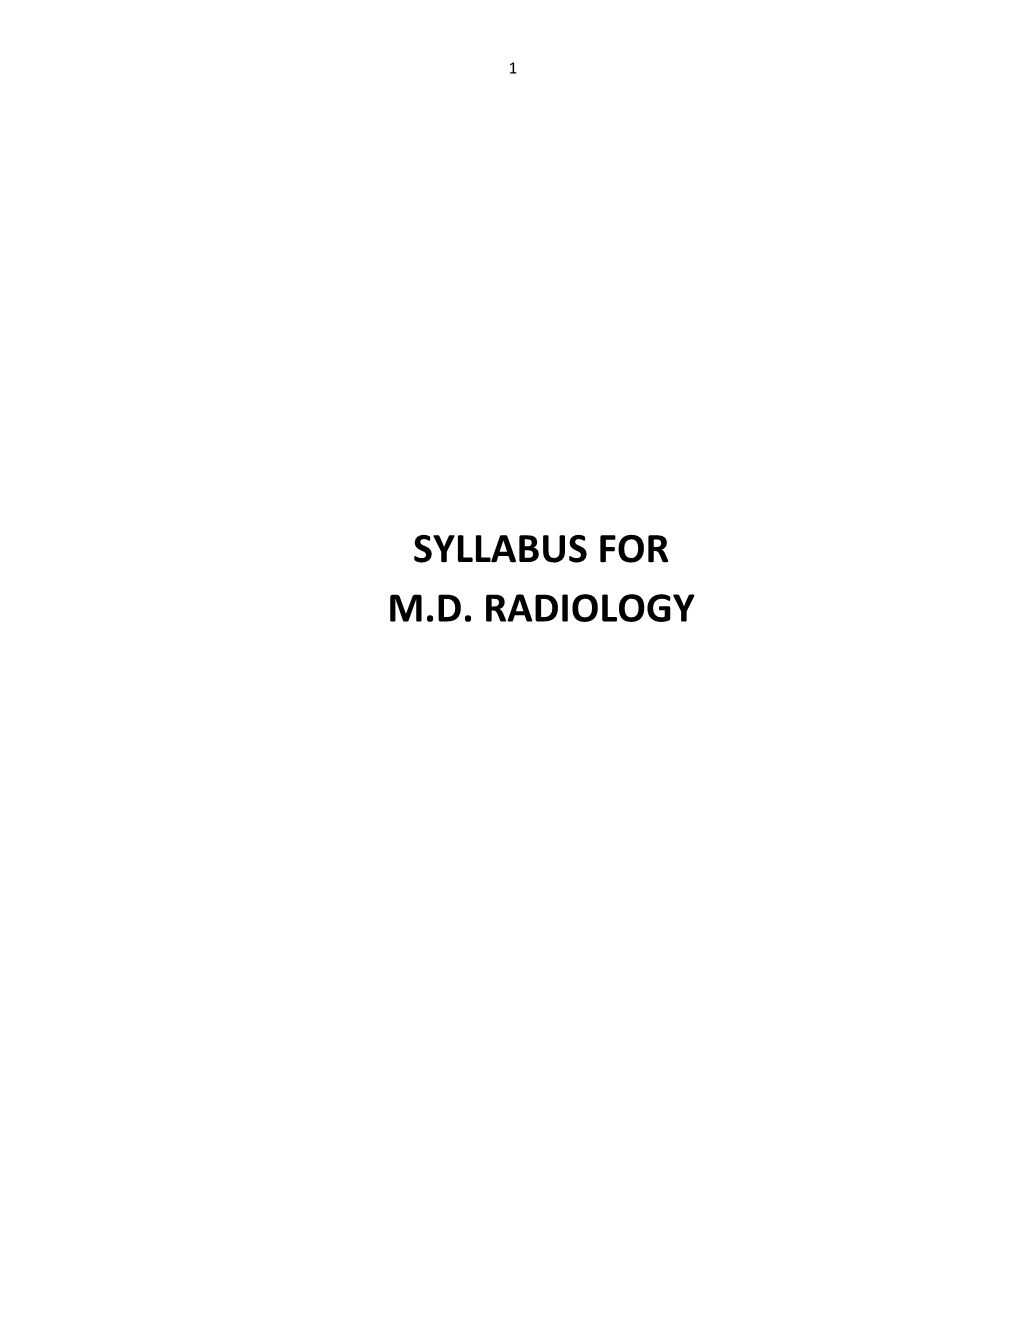 Syllabus for M.D. Radiology